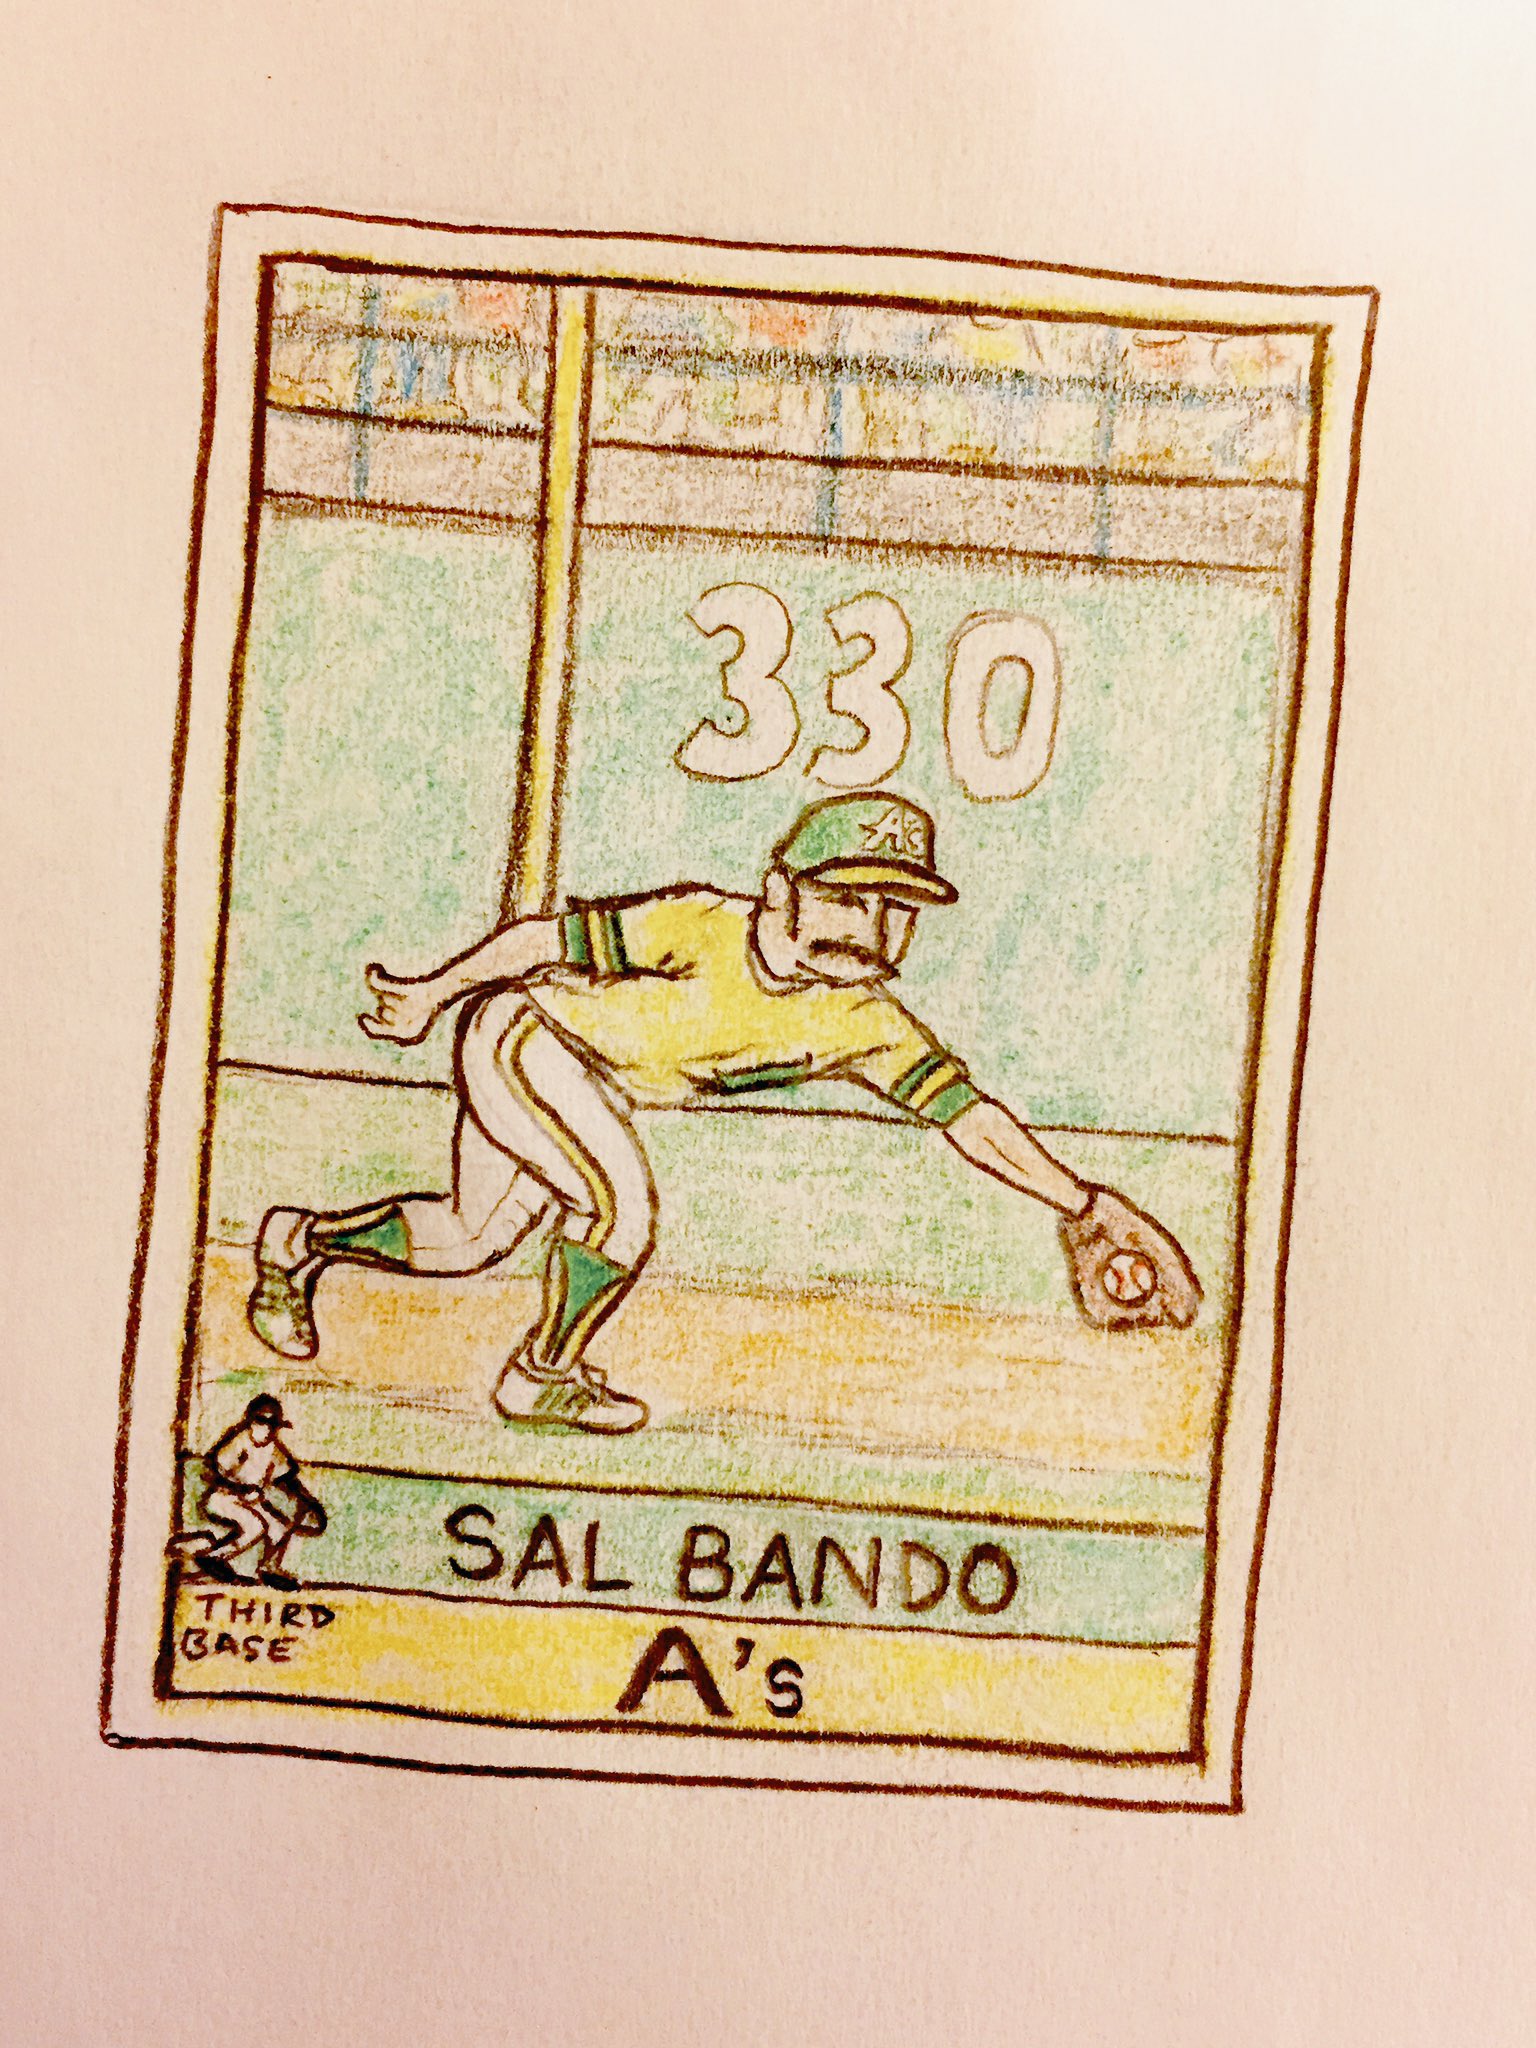 Happy 73rd birthday to Sal Bando!  